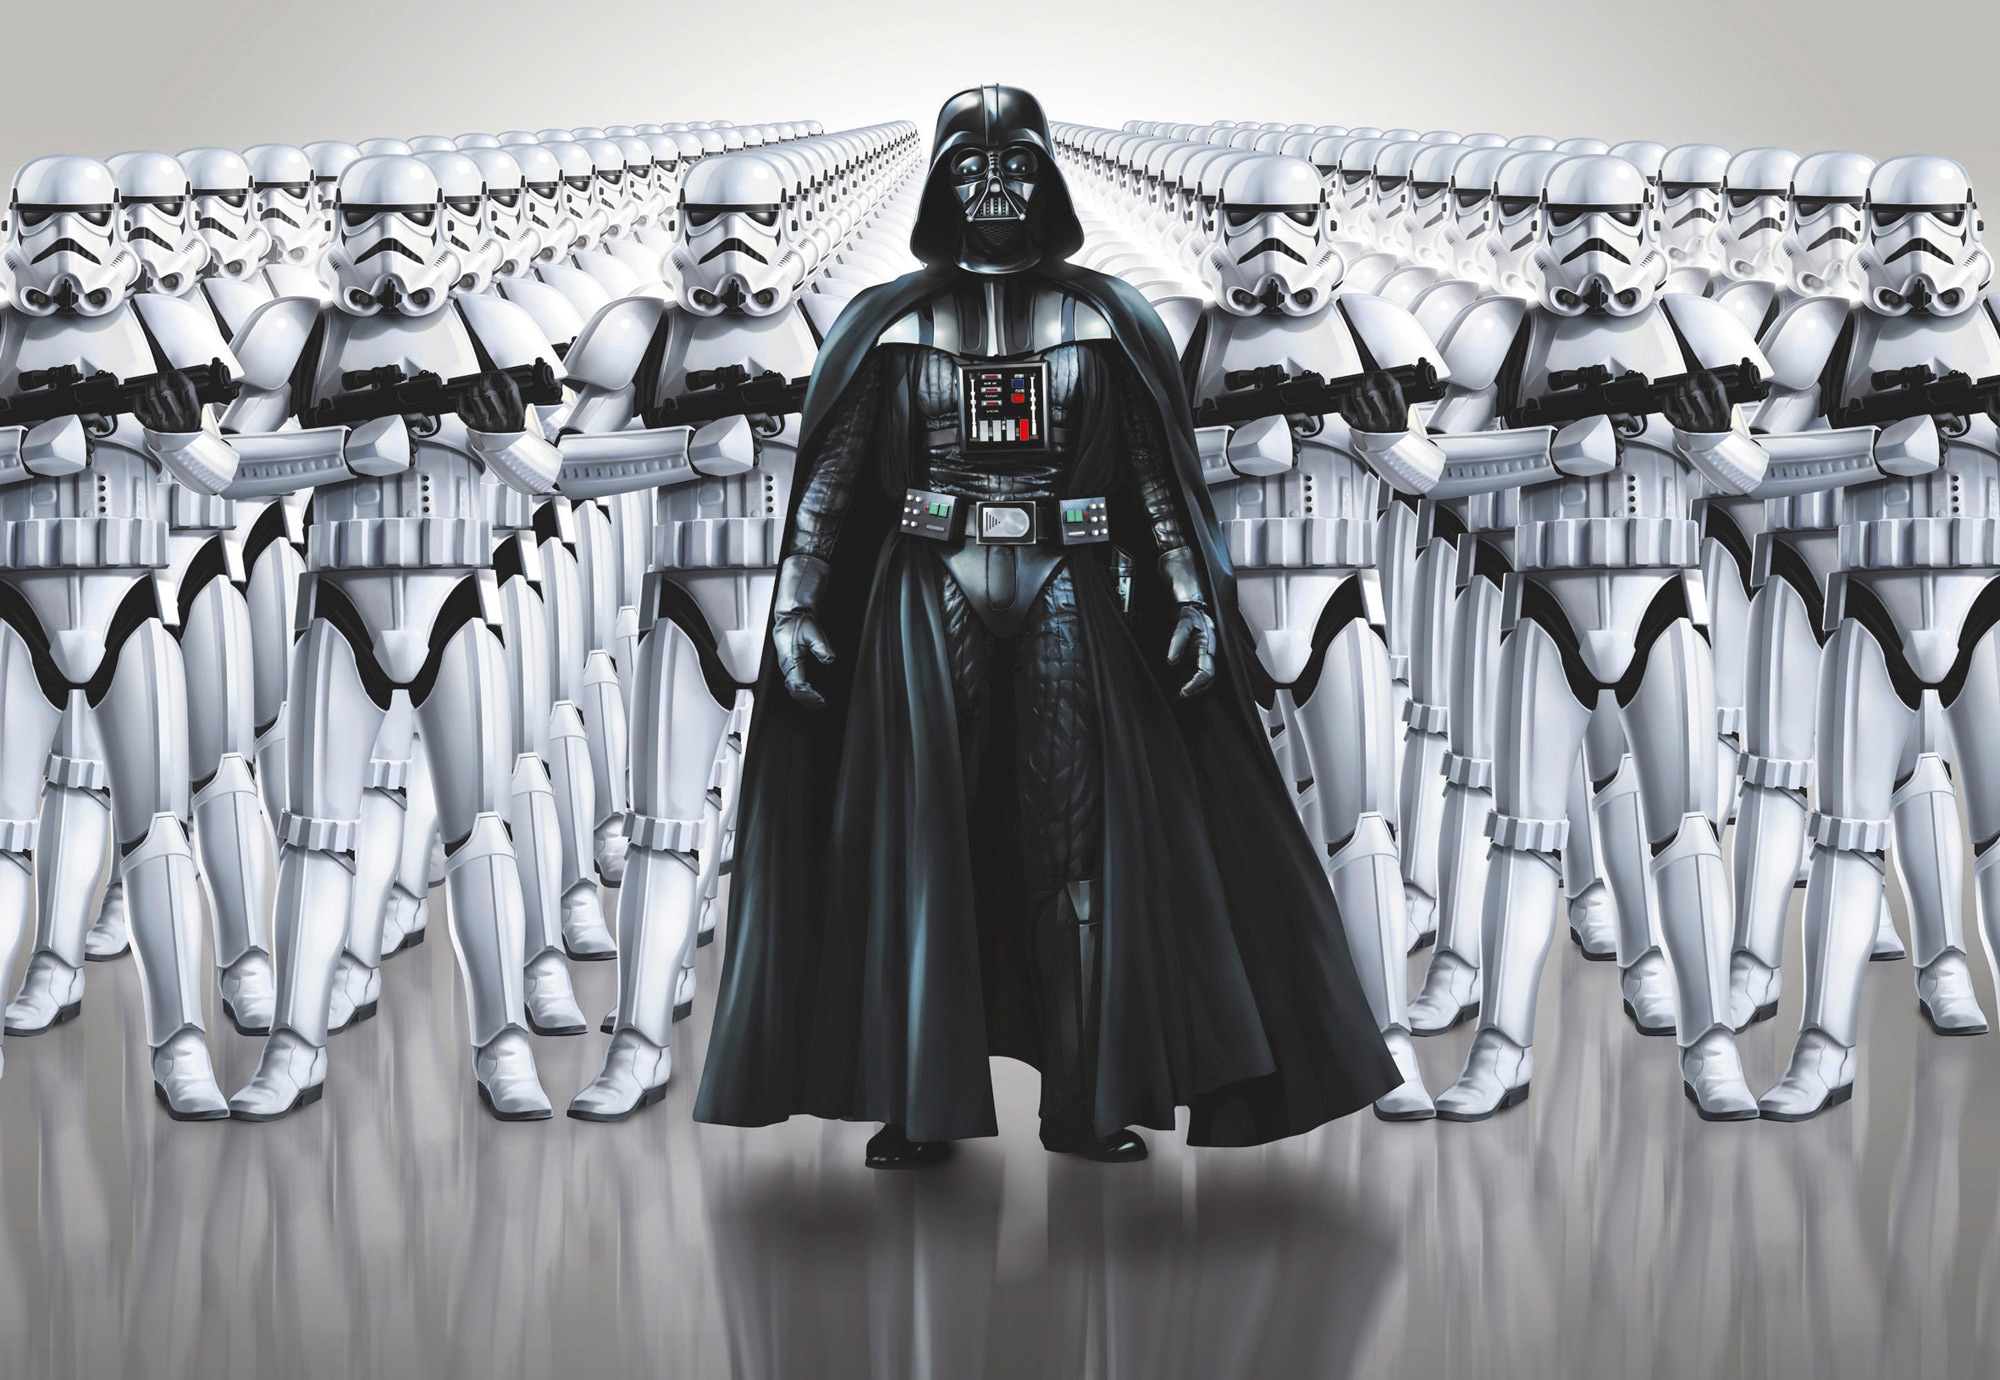 Fototapete »Star Wars Imperial Force«, 368x254 cm (Breite x Höhe), inklusive Kleister